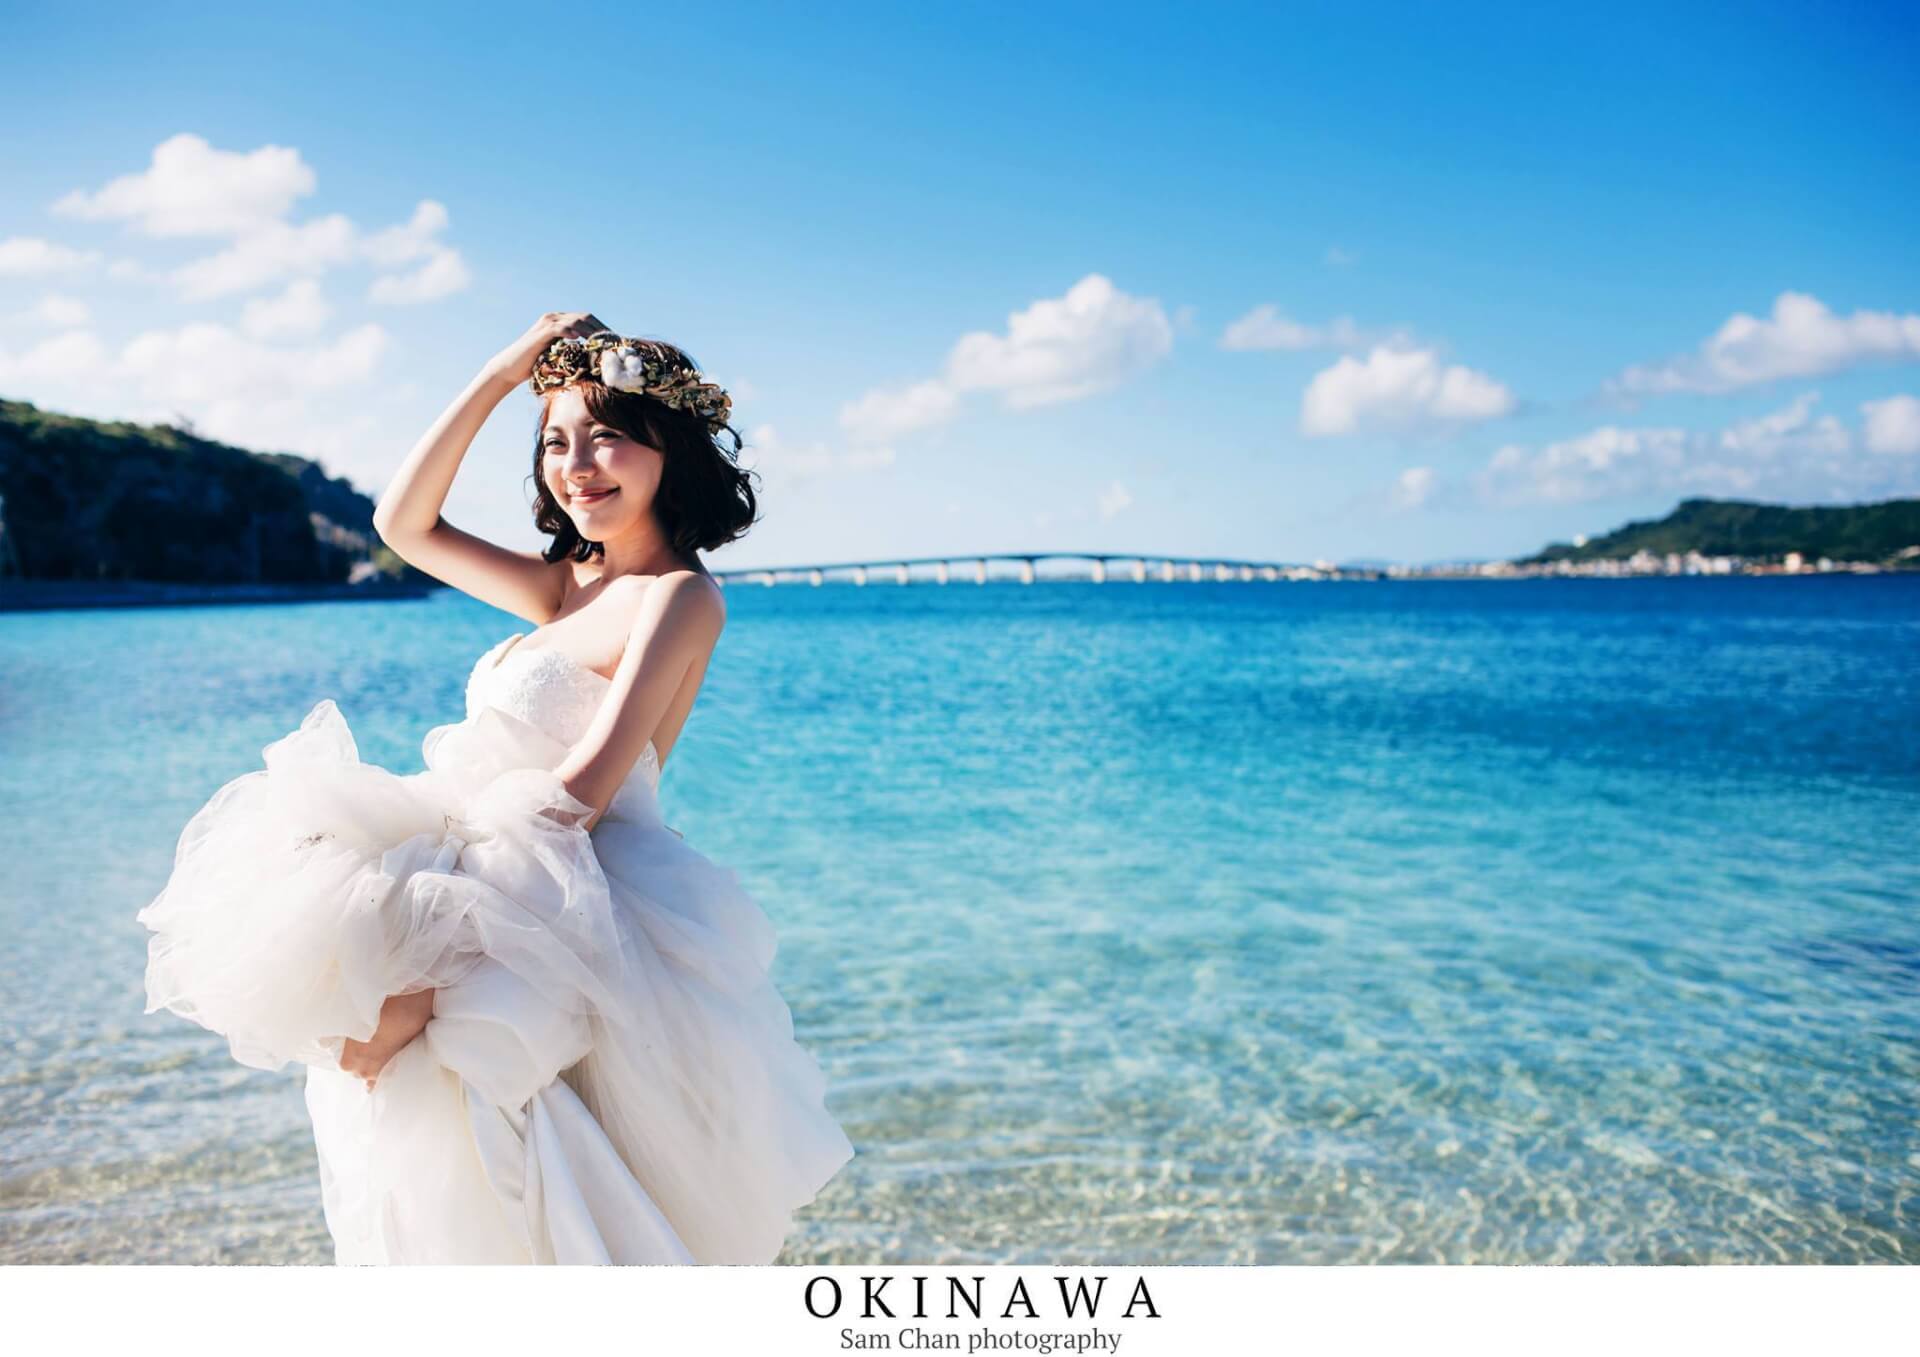 詹曜維 Sam Chan / ZoZo沖繩海外婚紗照分享